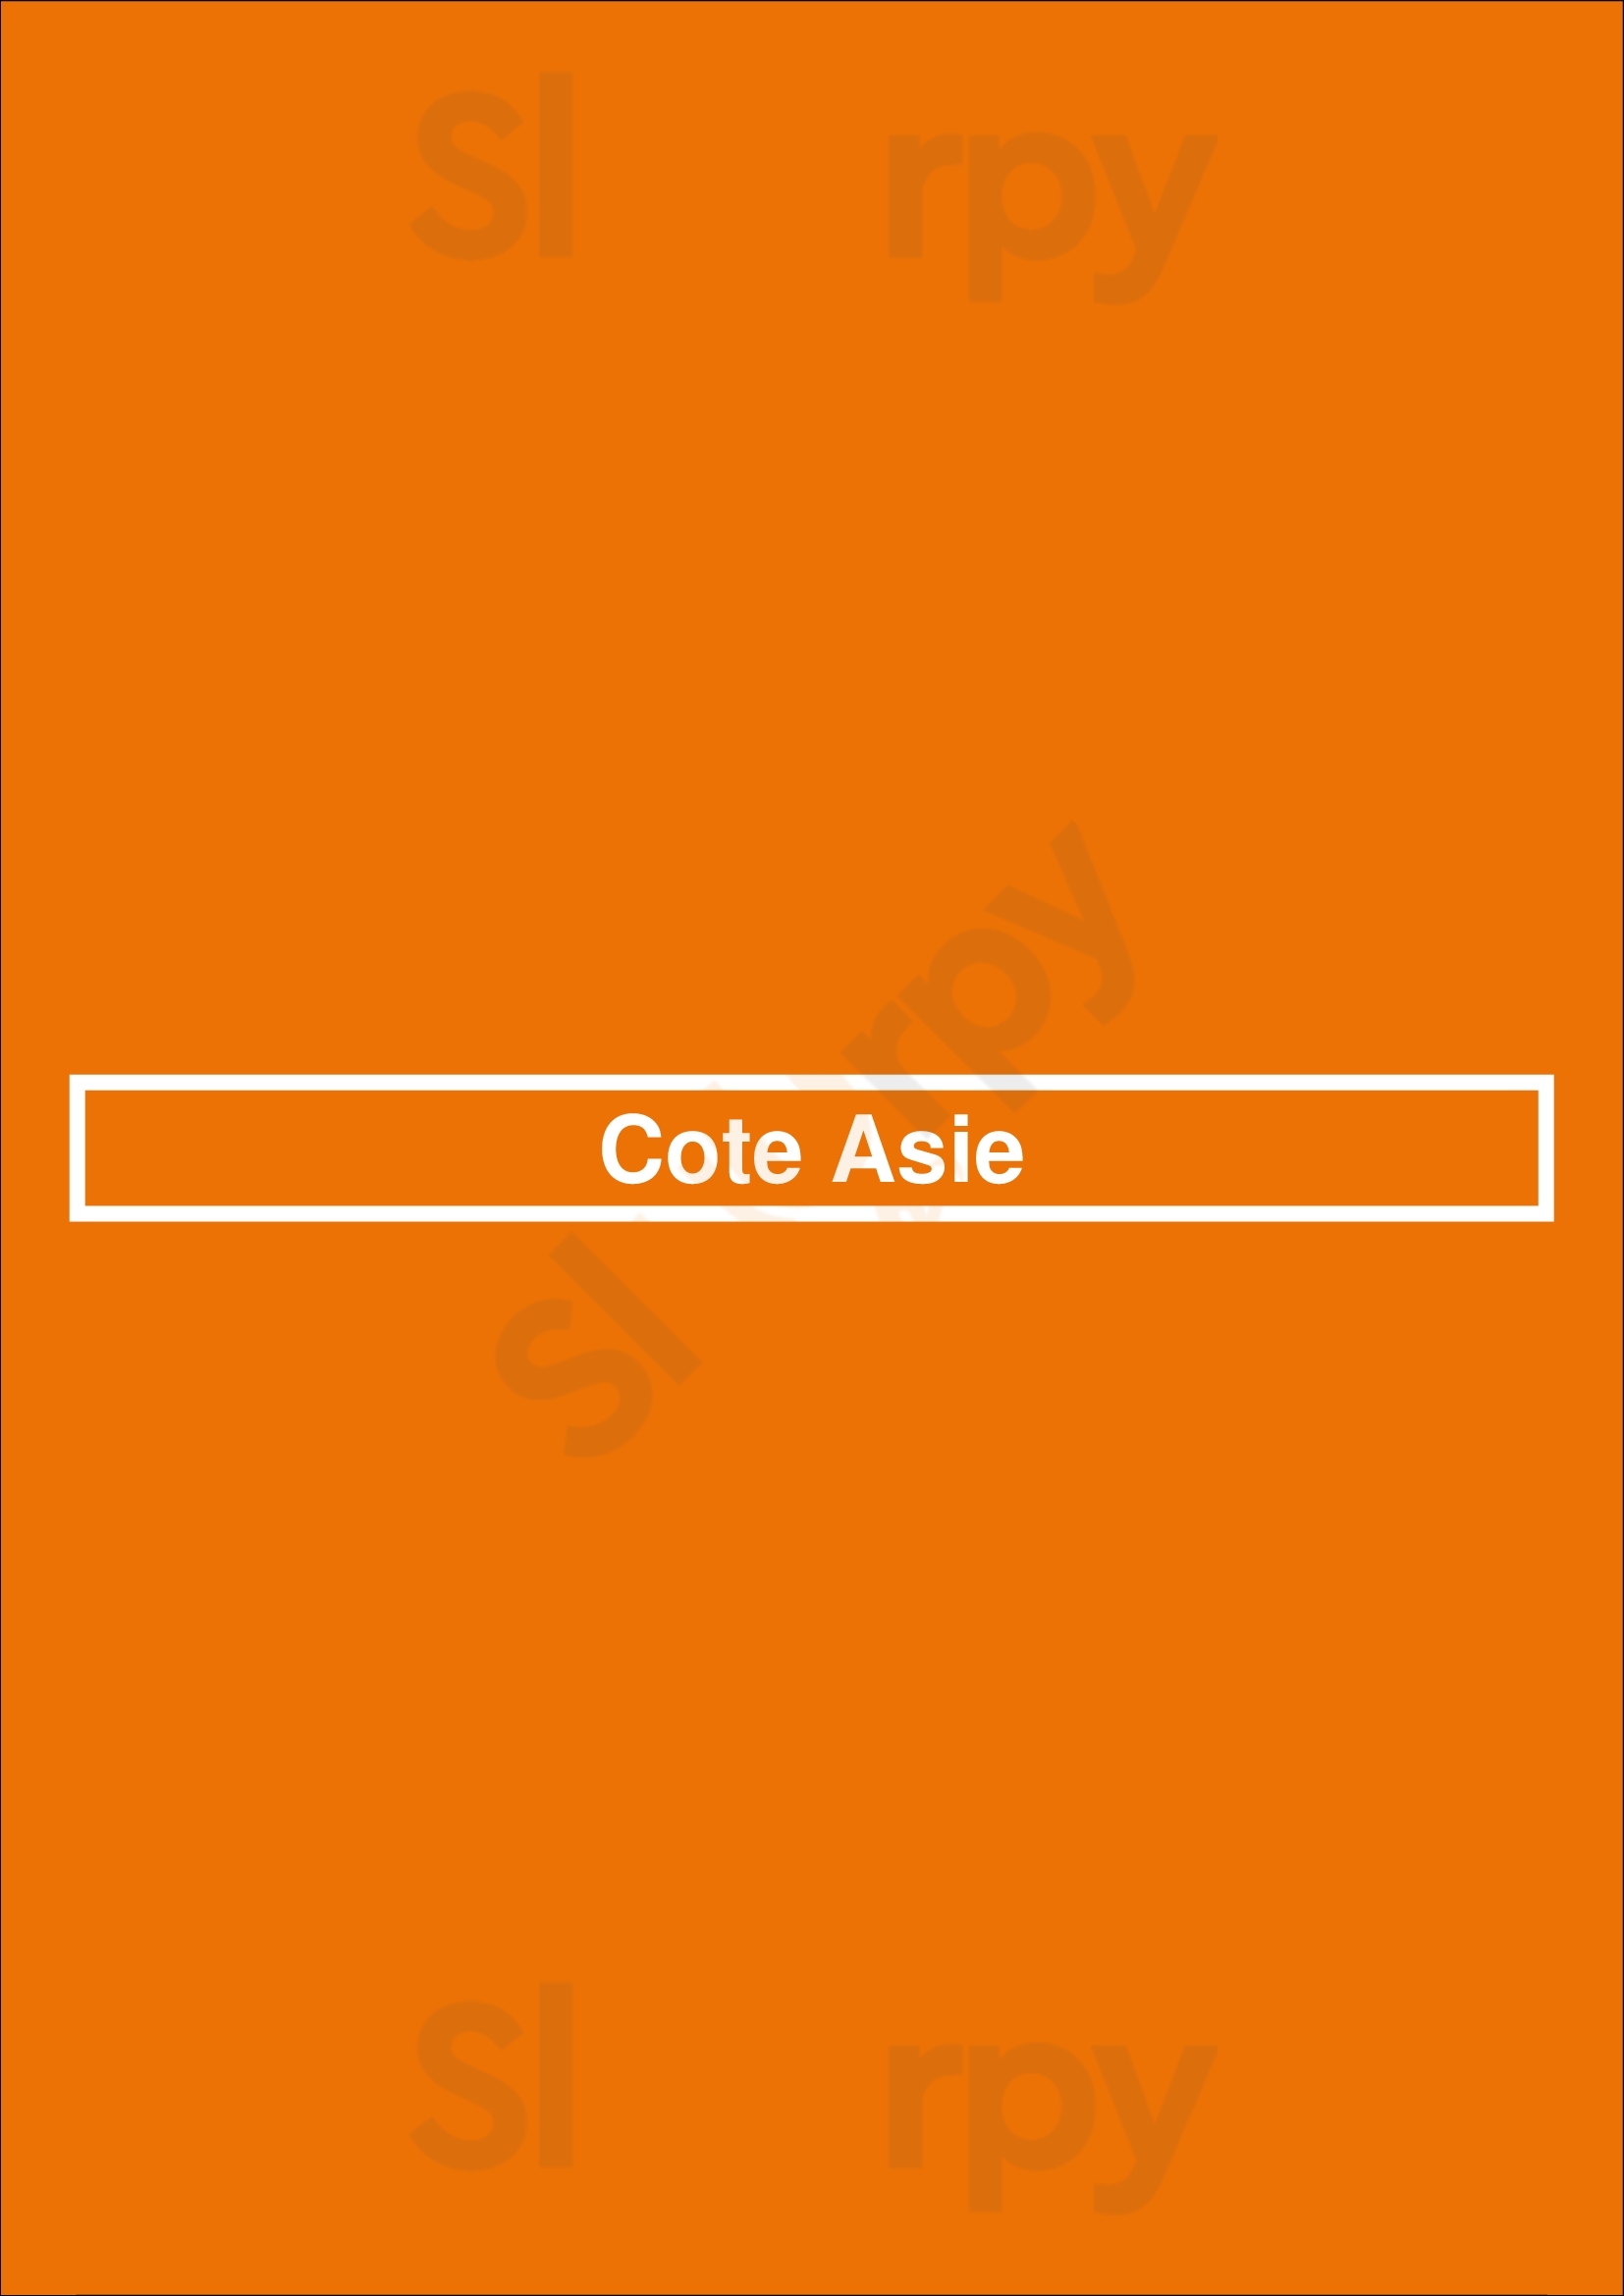 Cote Asie Paris Menu - 1